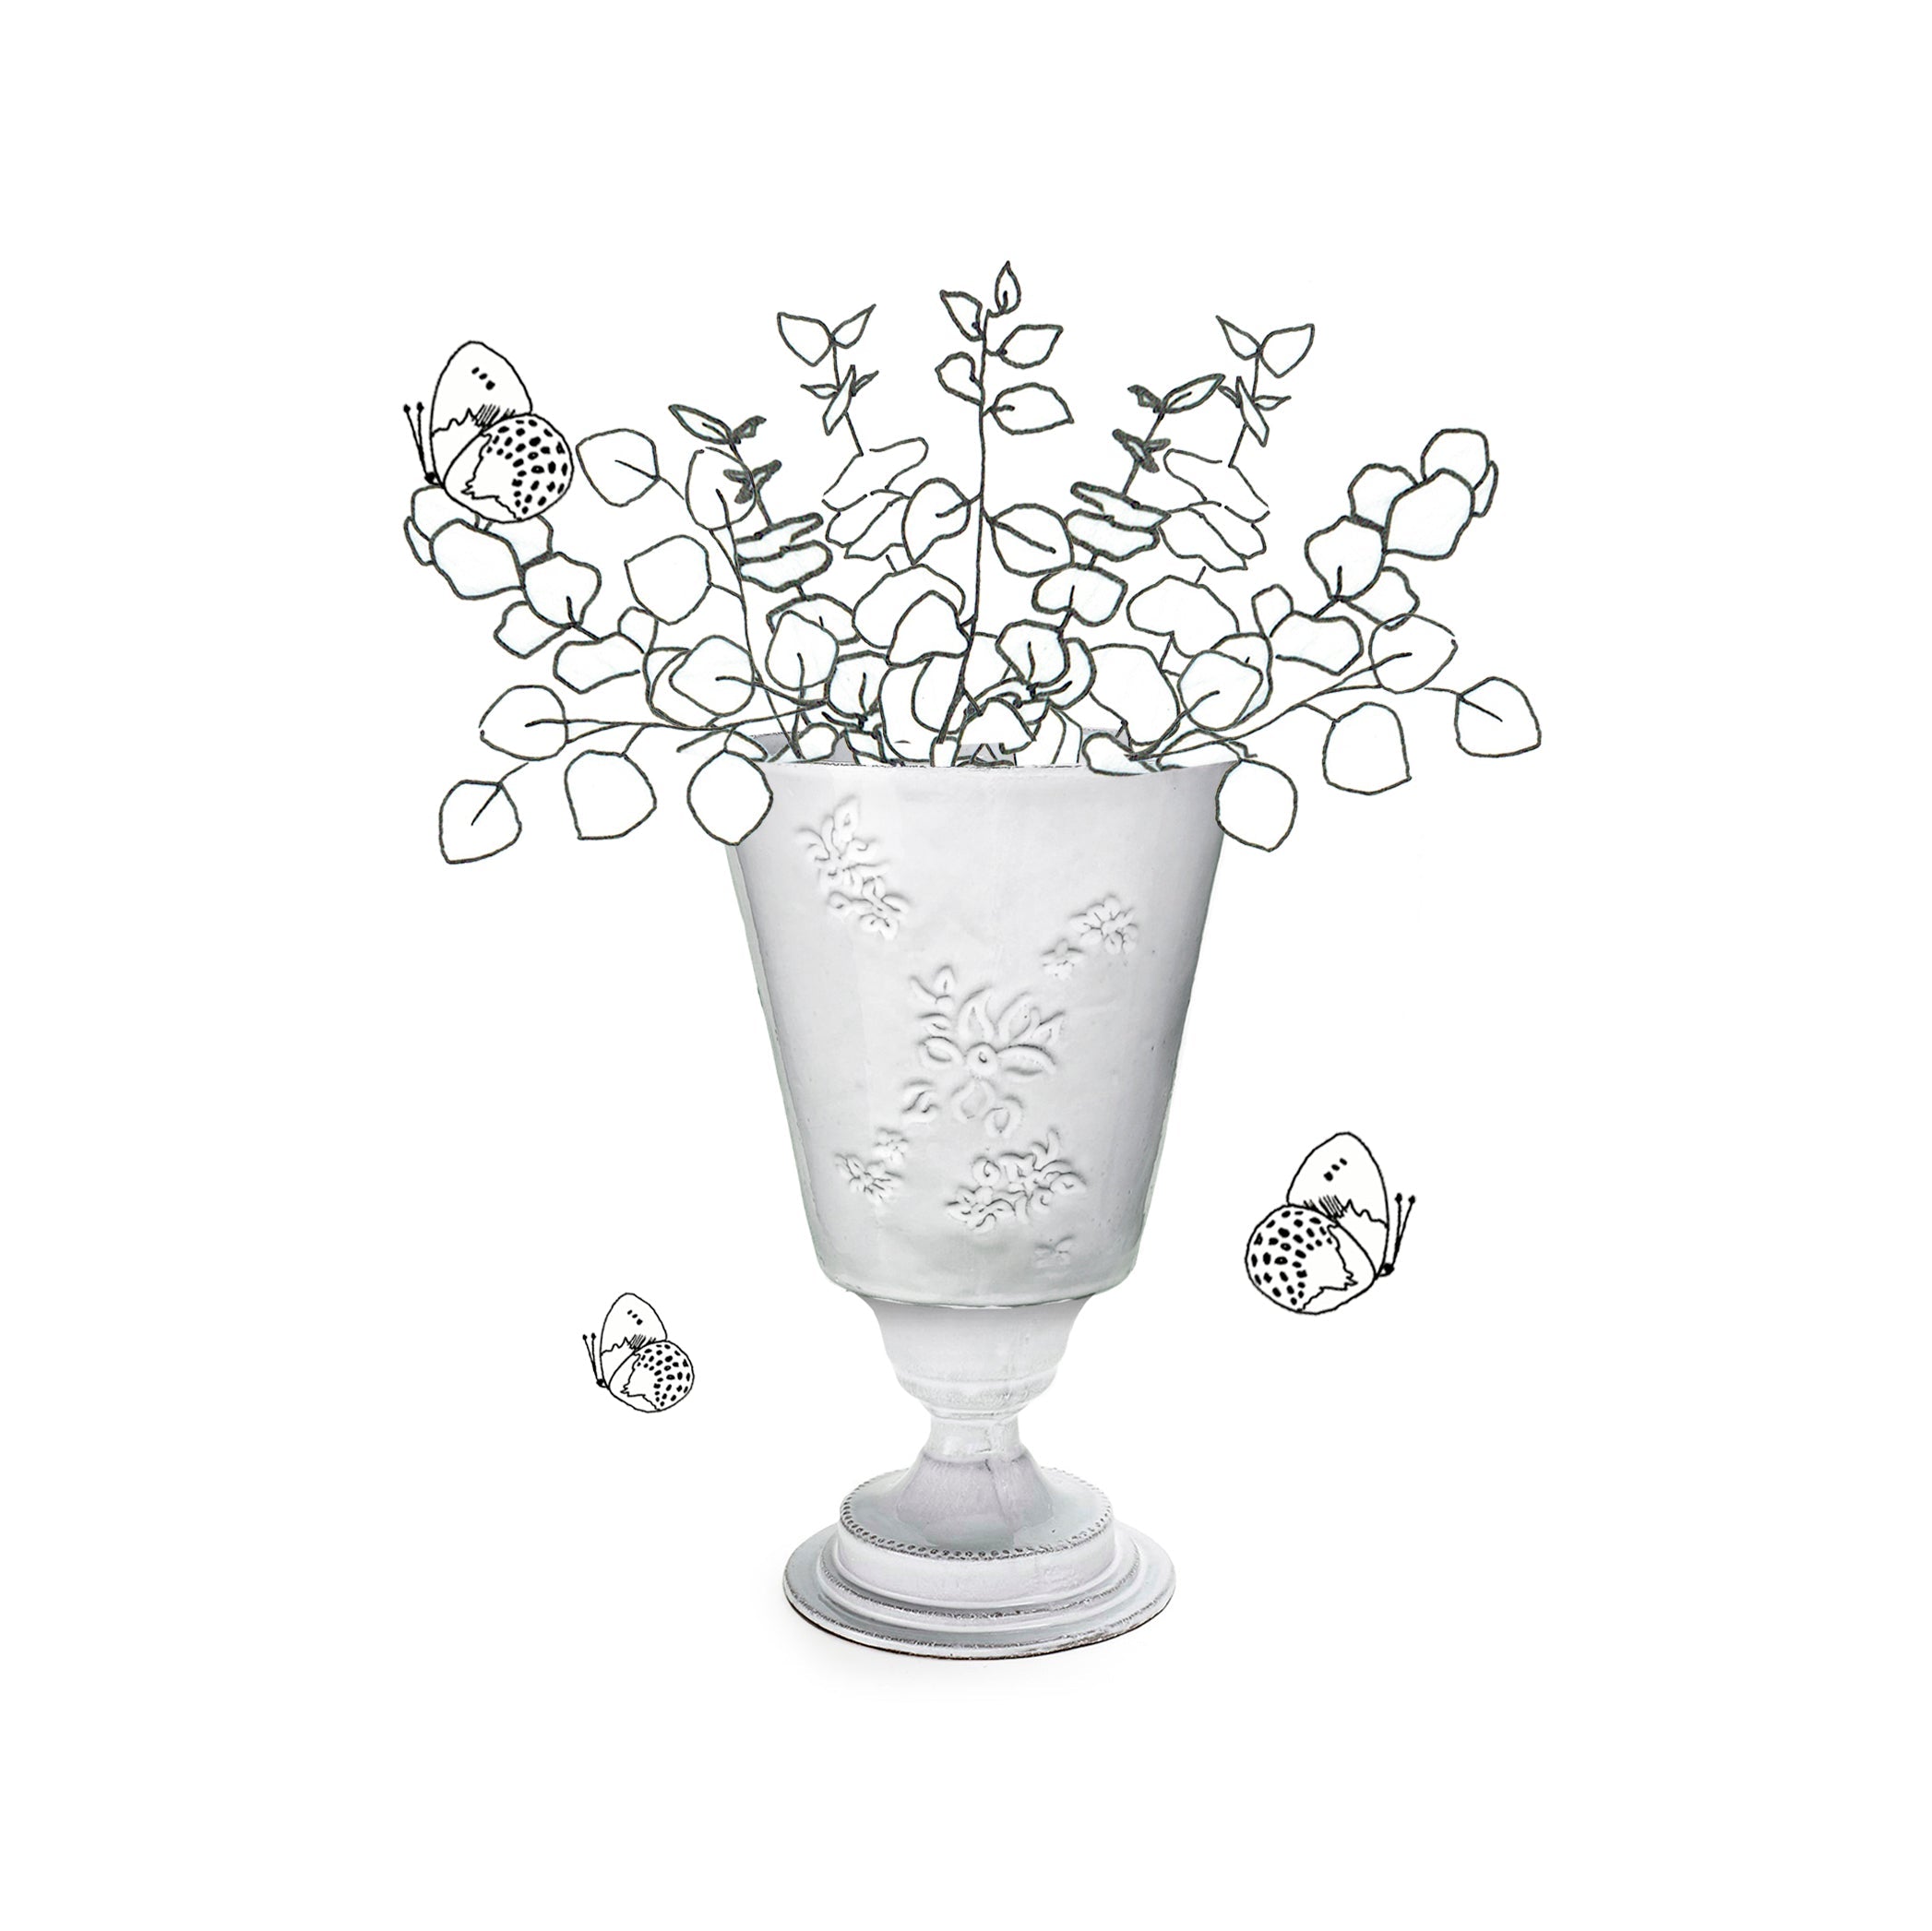 Astier de Villatte x Summerill & Bishop Petit Vase with Falling Flower, 24.5cm